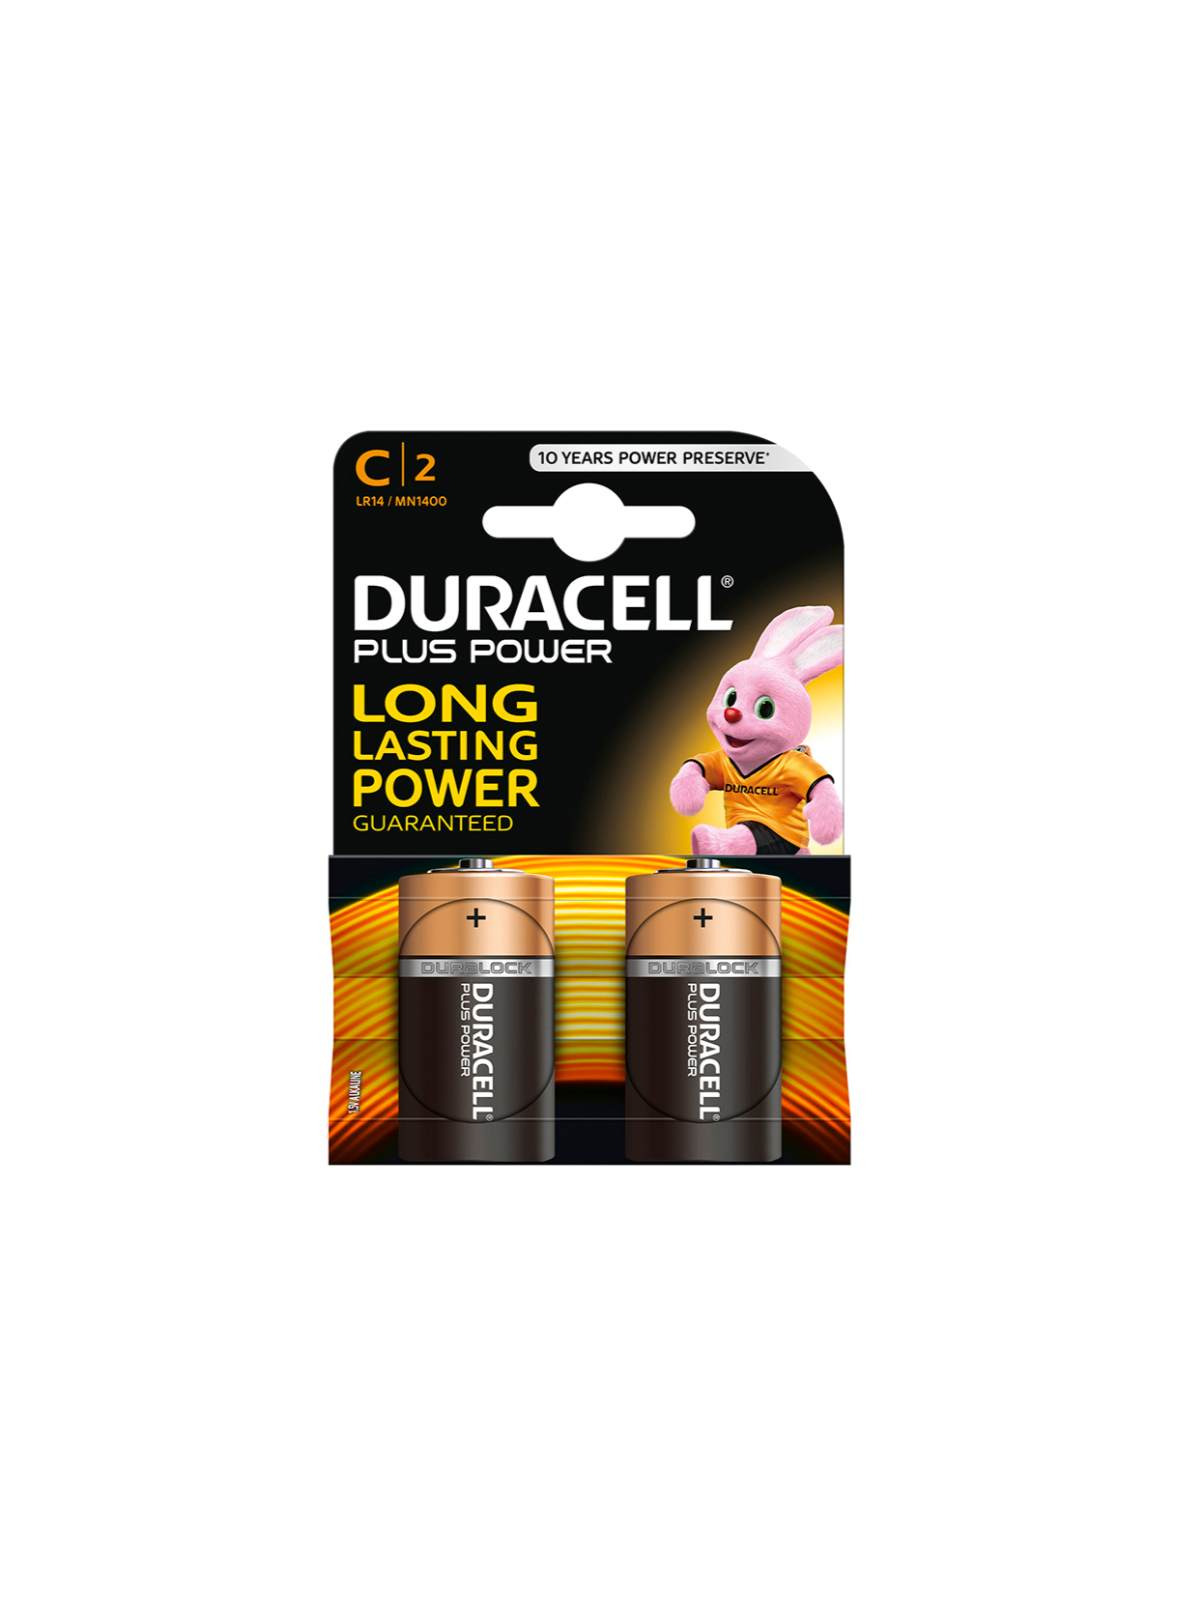 Duracell Plus Power Pila Alcalina C LR14 - Comprar Pilas y baterías Duracell - Pilas & baterías (1)